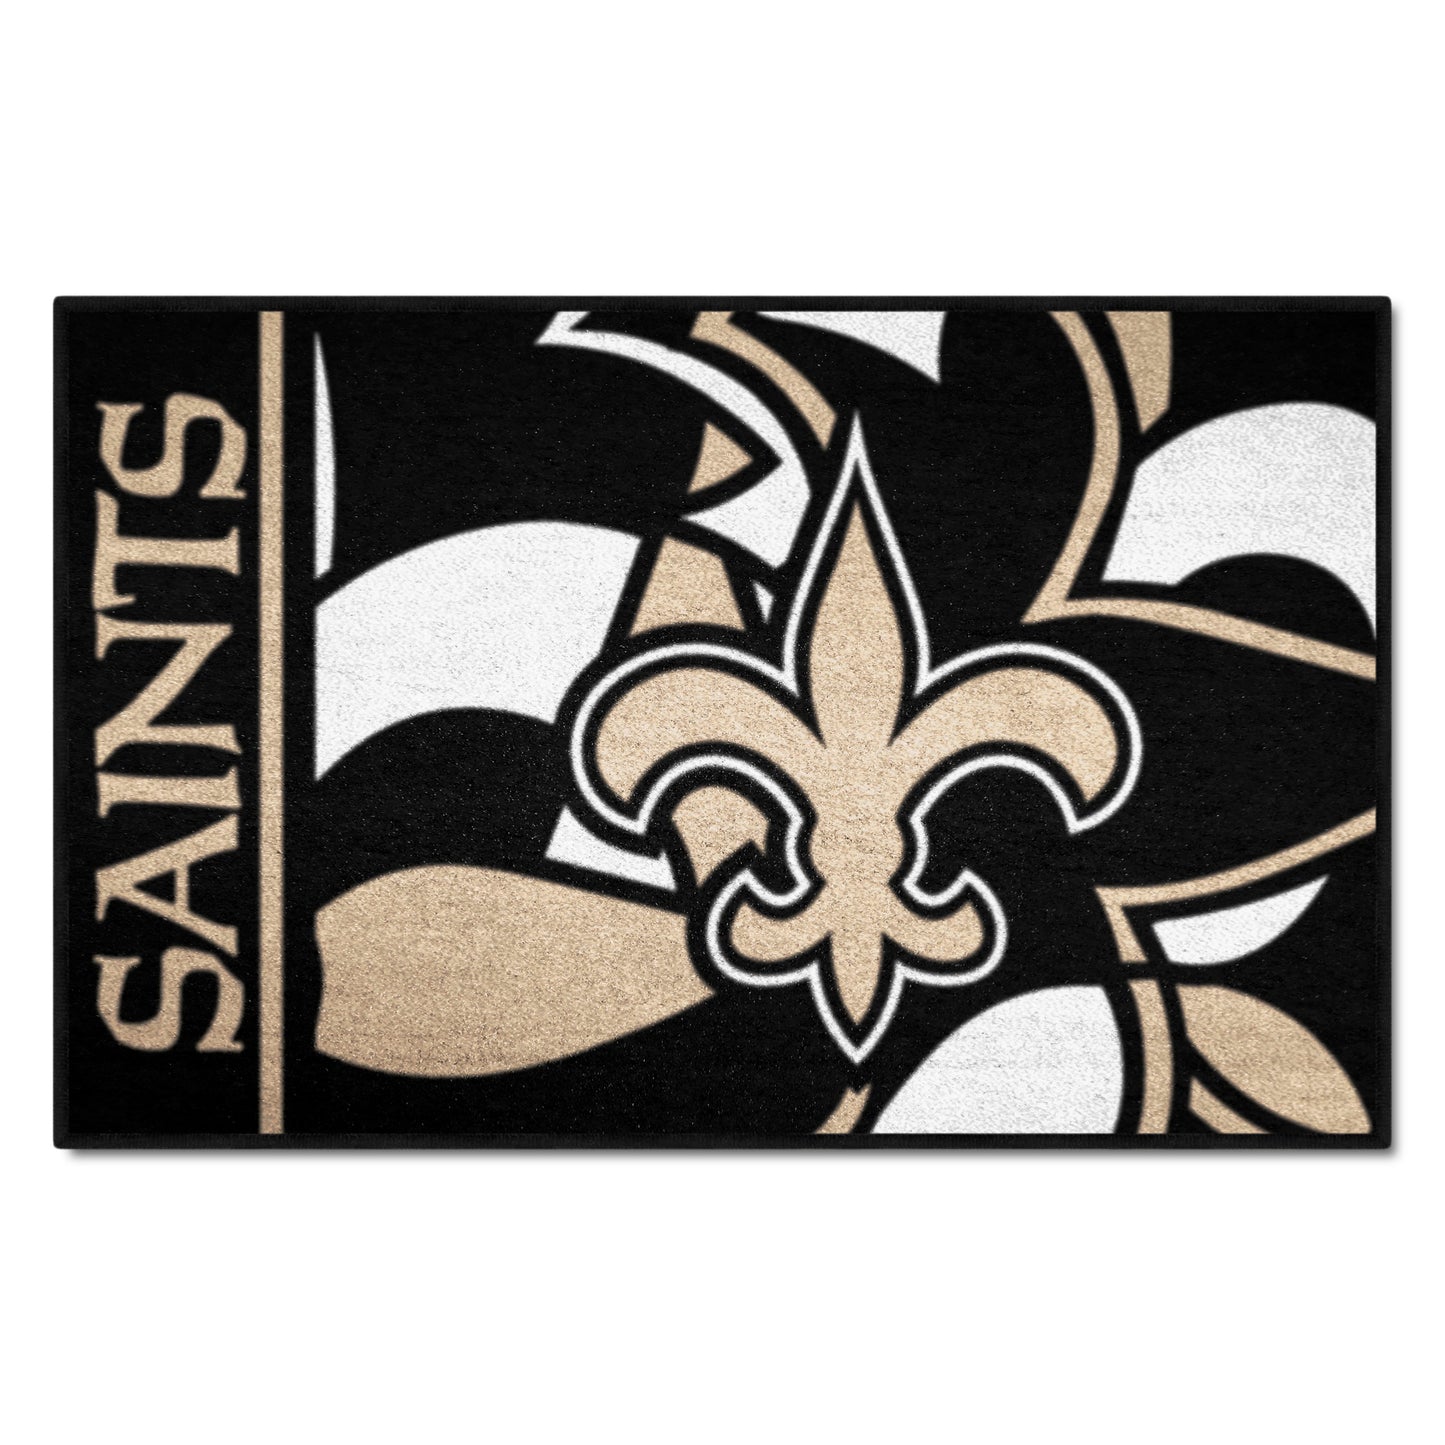 New Orleans Saints Starter Mat XFIT Design - 19in x 30in Accent Rug